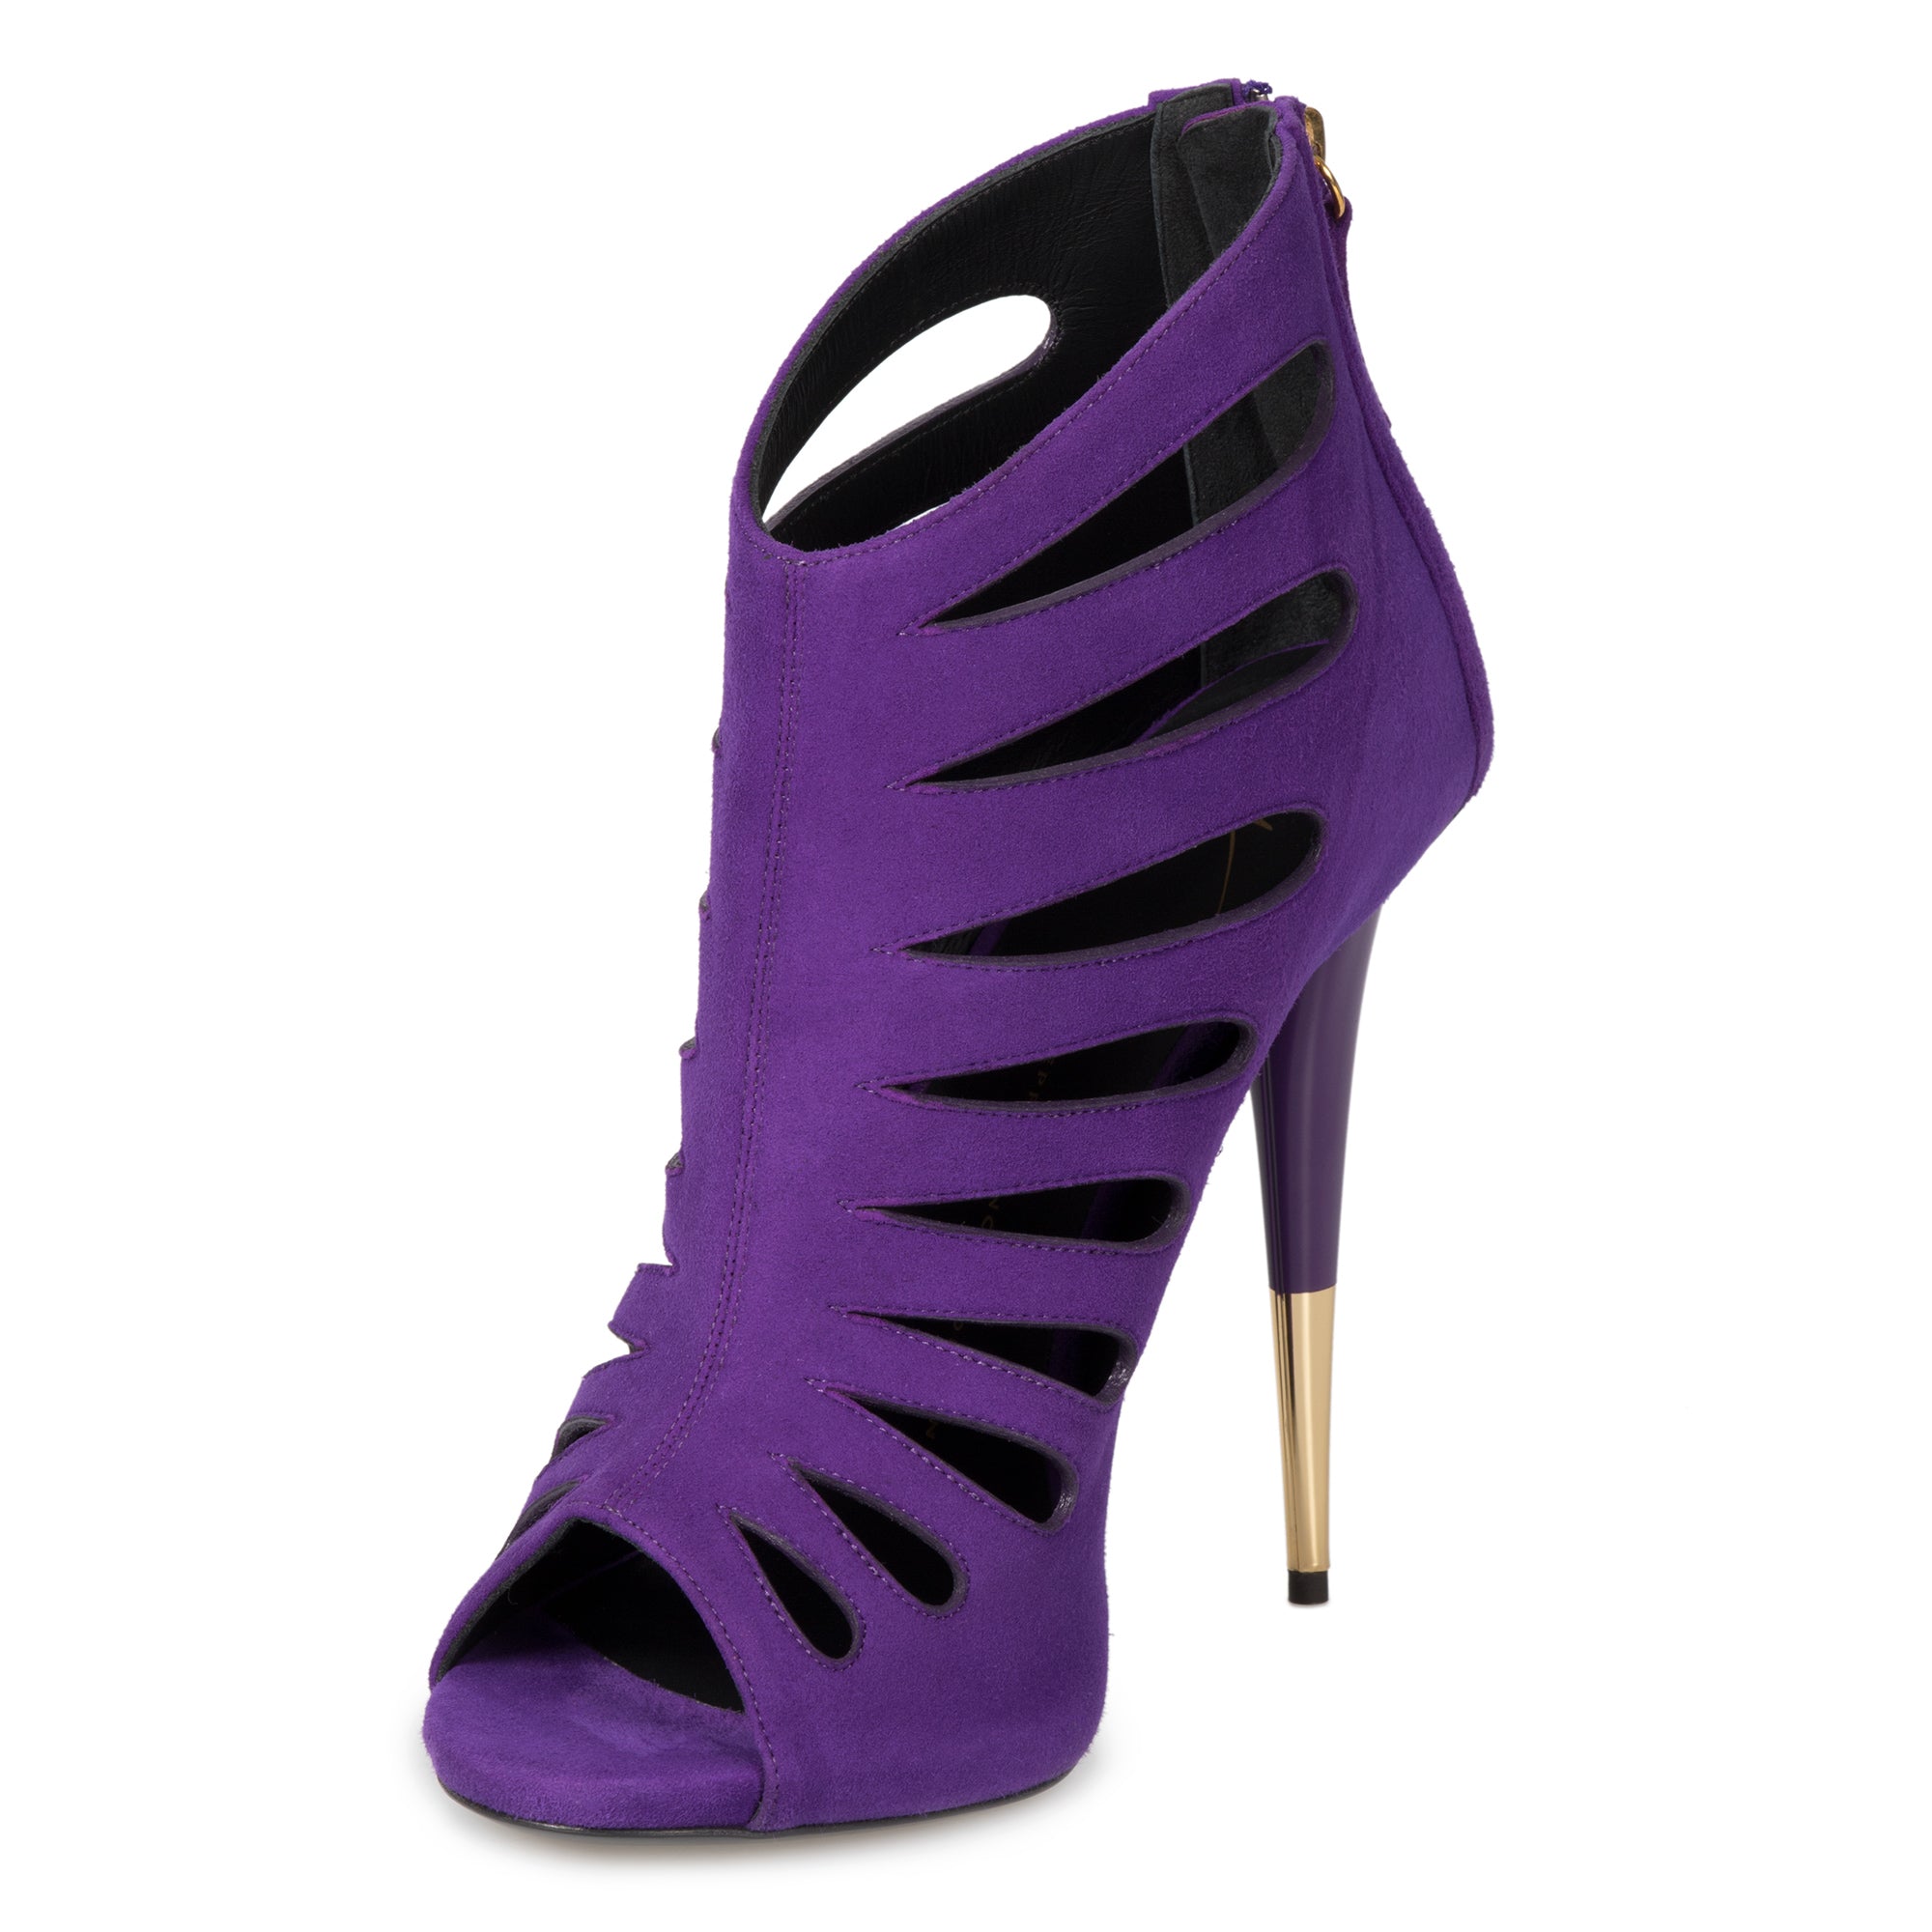 Giuseppe Zanotti Alien Violet Cutout Suede 127mm Ankle Boots